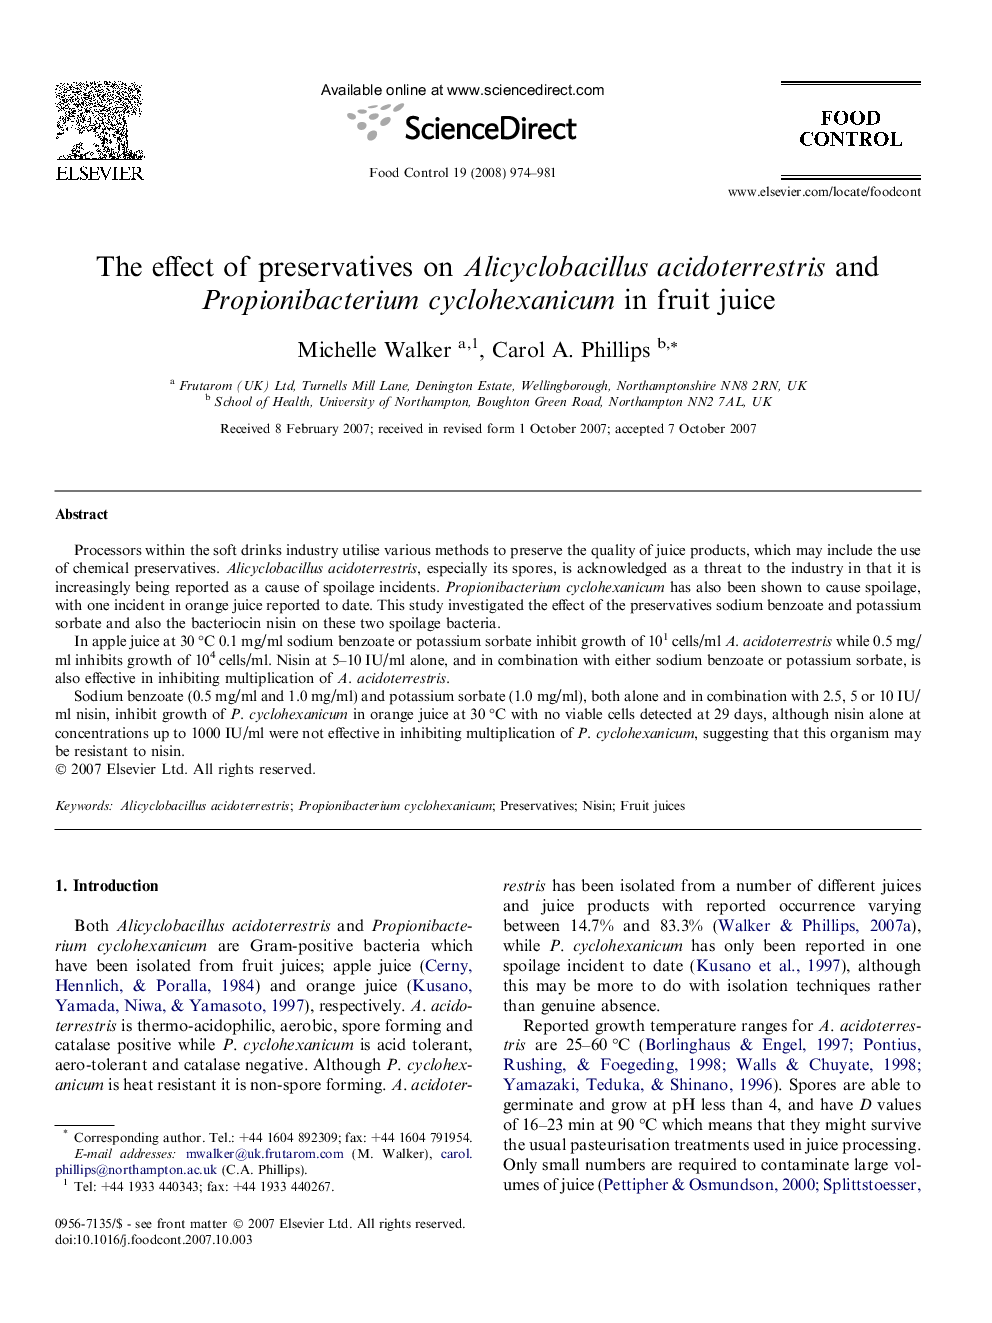 The effect of preservatives on Alicyclobacillusacidoterrestris and Propionibacteriumcyclohexanicum in fruit juice